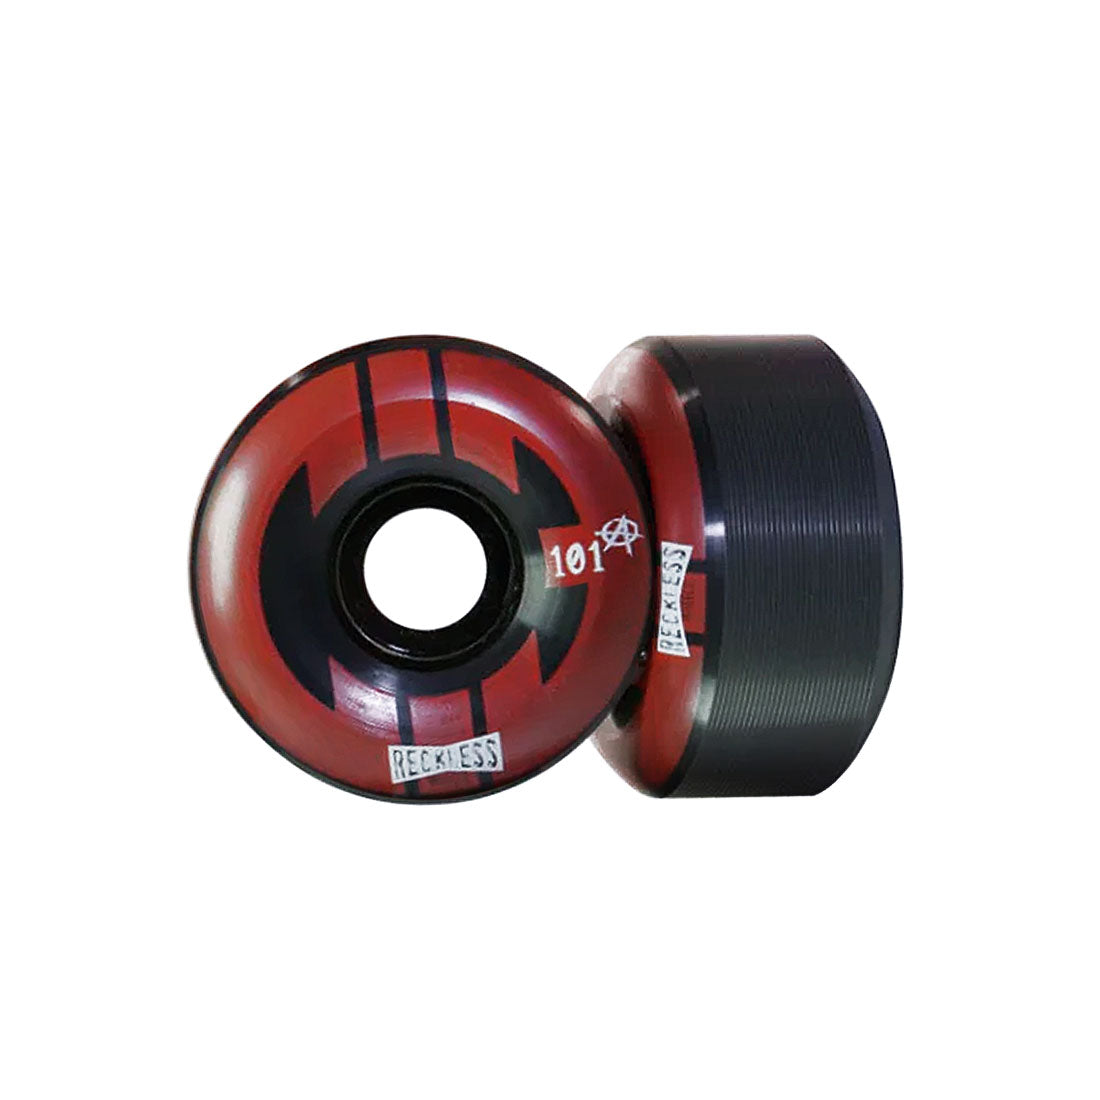 Reckless CIB Ramp 58mm 101a 4pk - Black/Red Roller Skate Wheels